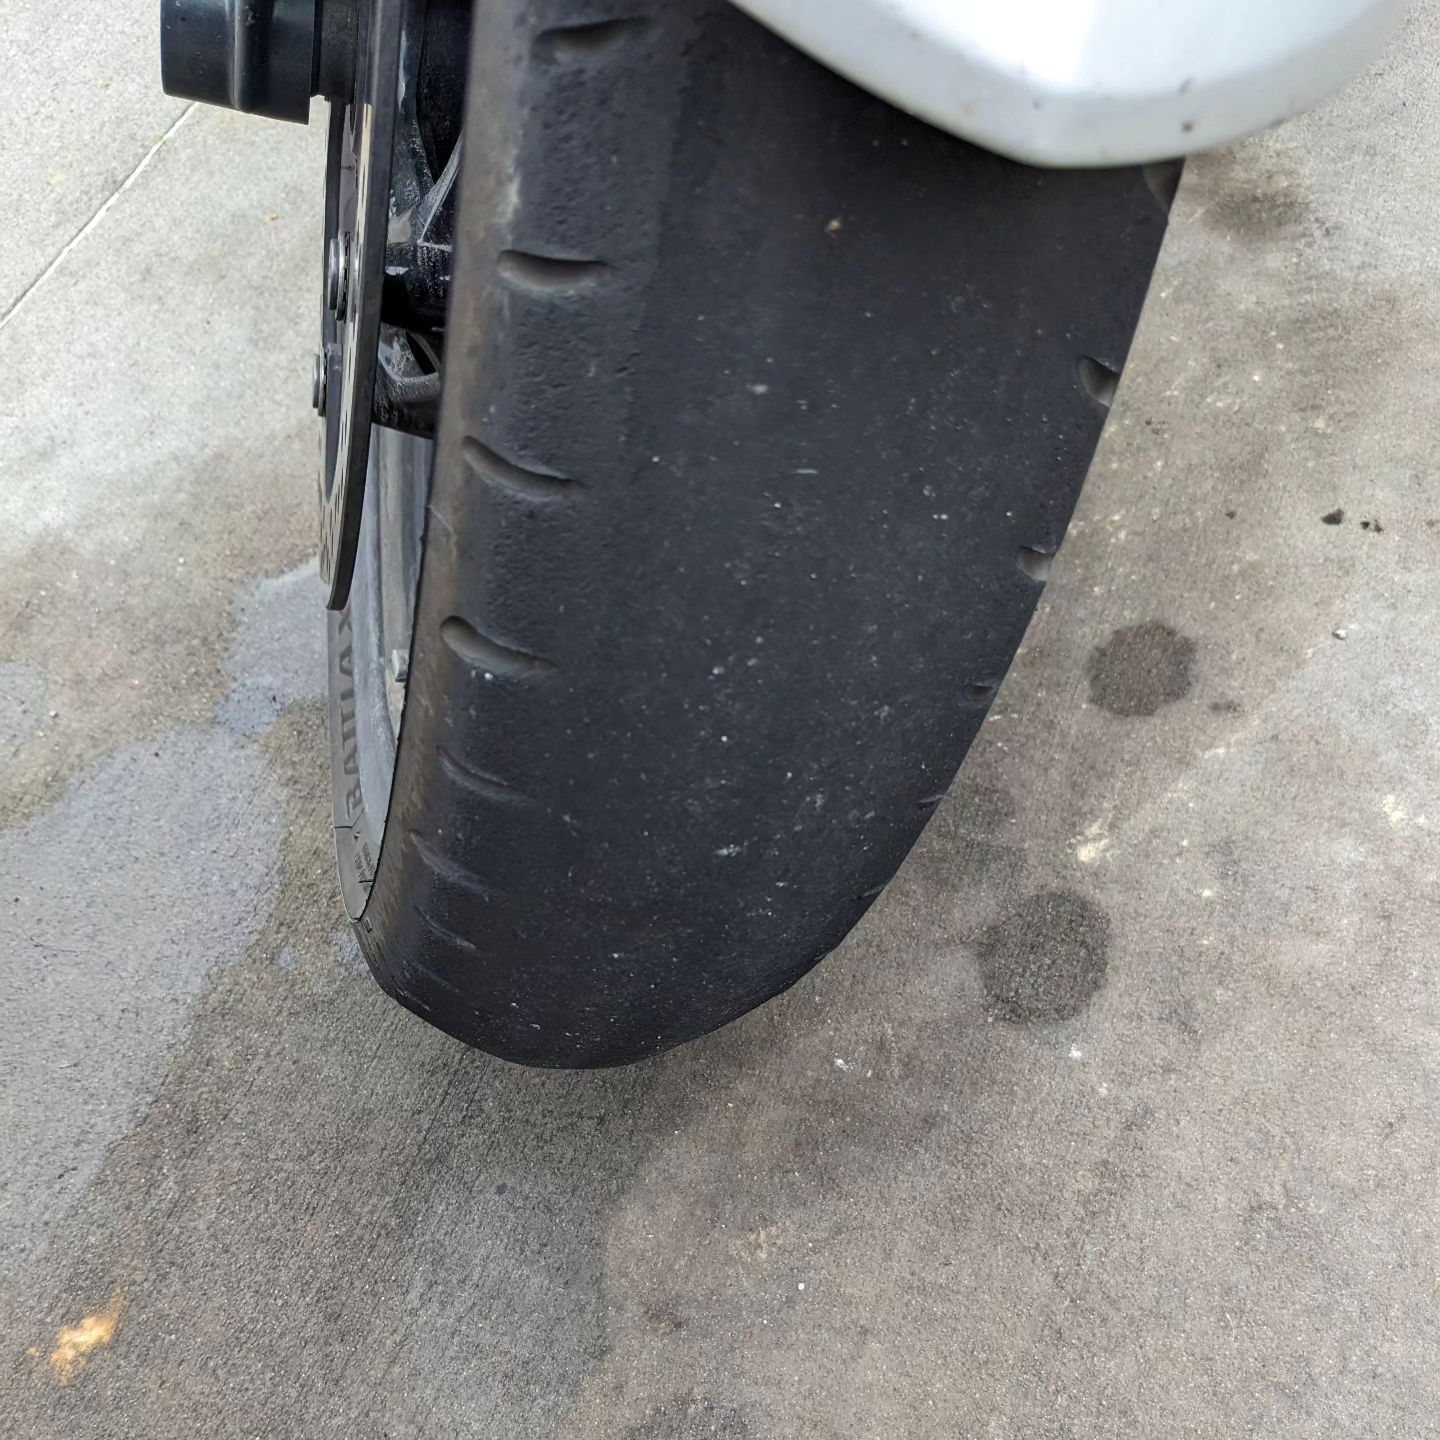 This here is the front tire of someone who has had a lot of fun on his bike this last week on some amazing roads... #motorrad #tailofthedragon #blueridgeparkway #cherohalaskyway #bucketlist #bucketlistadventures